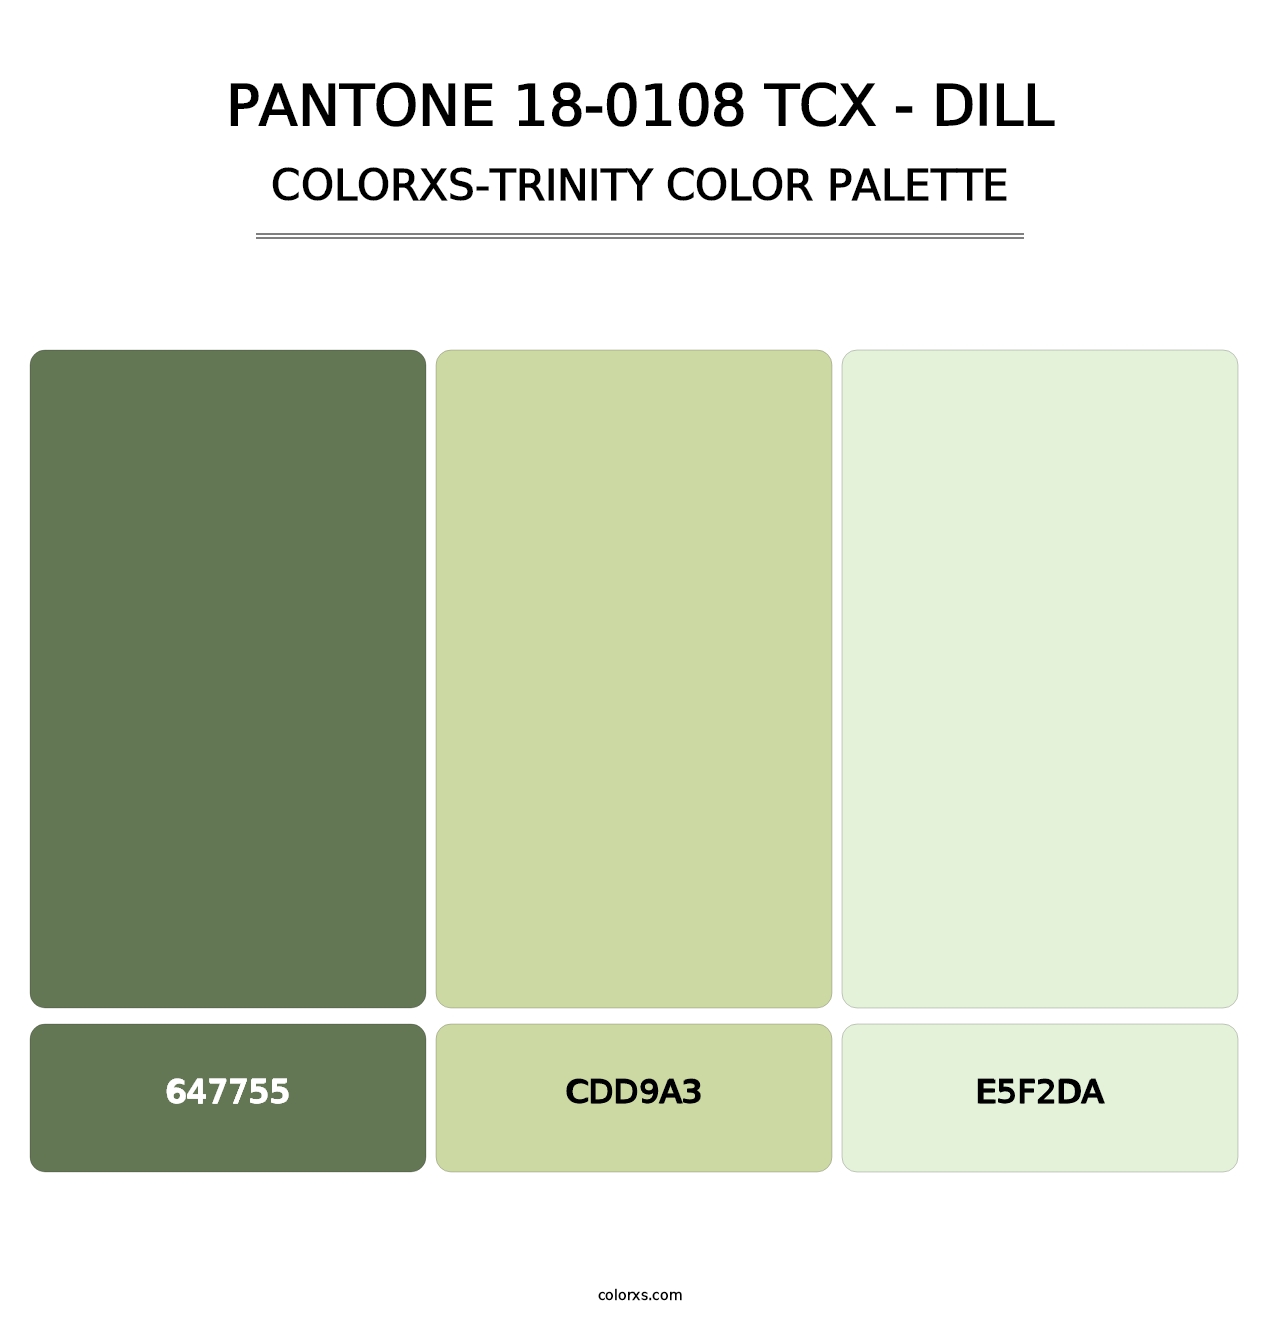 PANTONE 18-0108 TCX - Dill - Colorxs Trinity Palette